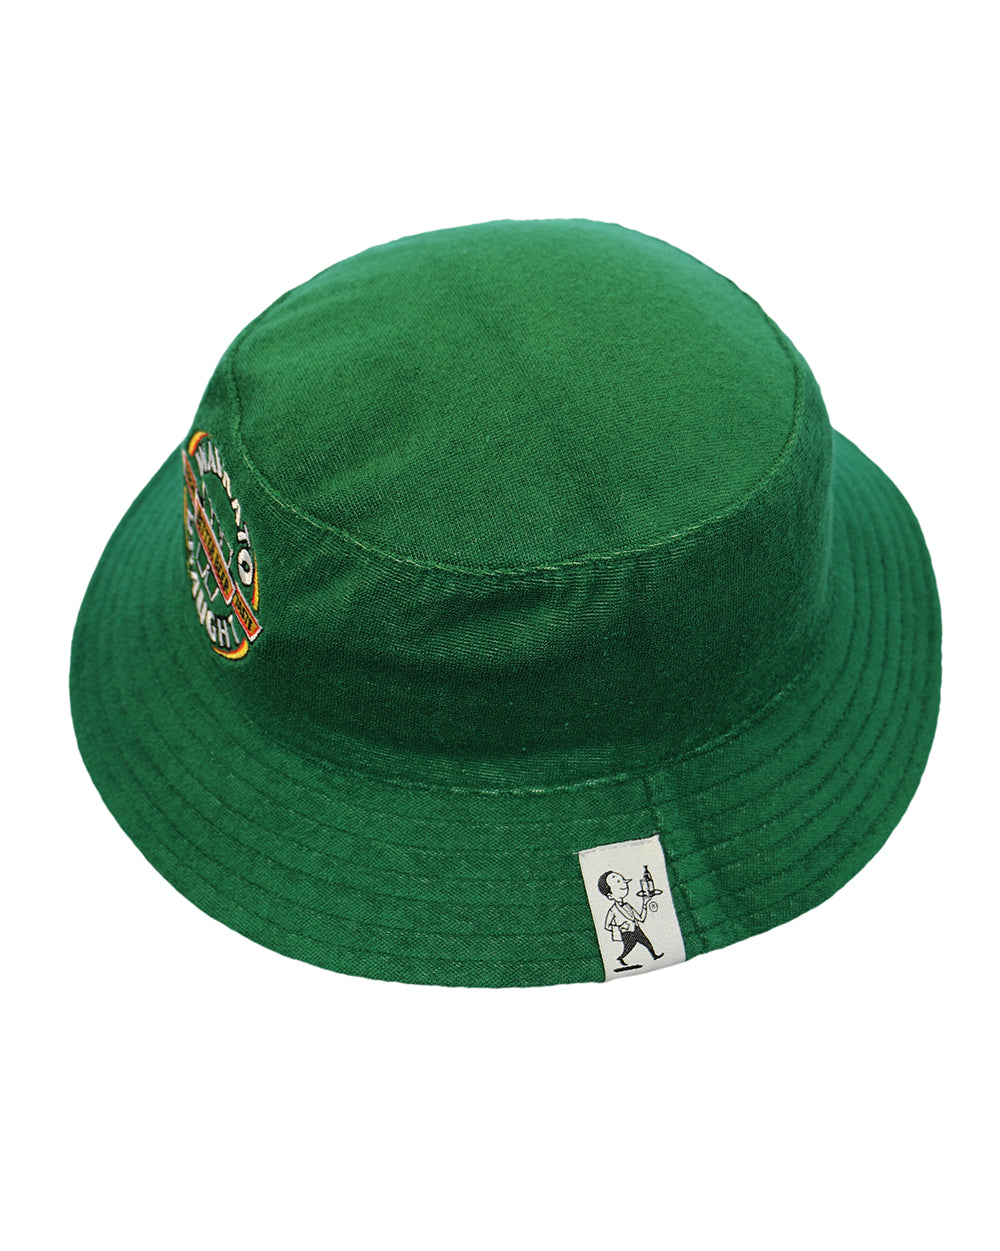 Waikato Draught Bucket Hat - Beer Gear Apparel & Merchandise